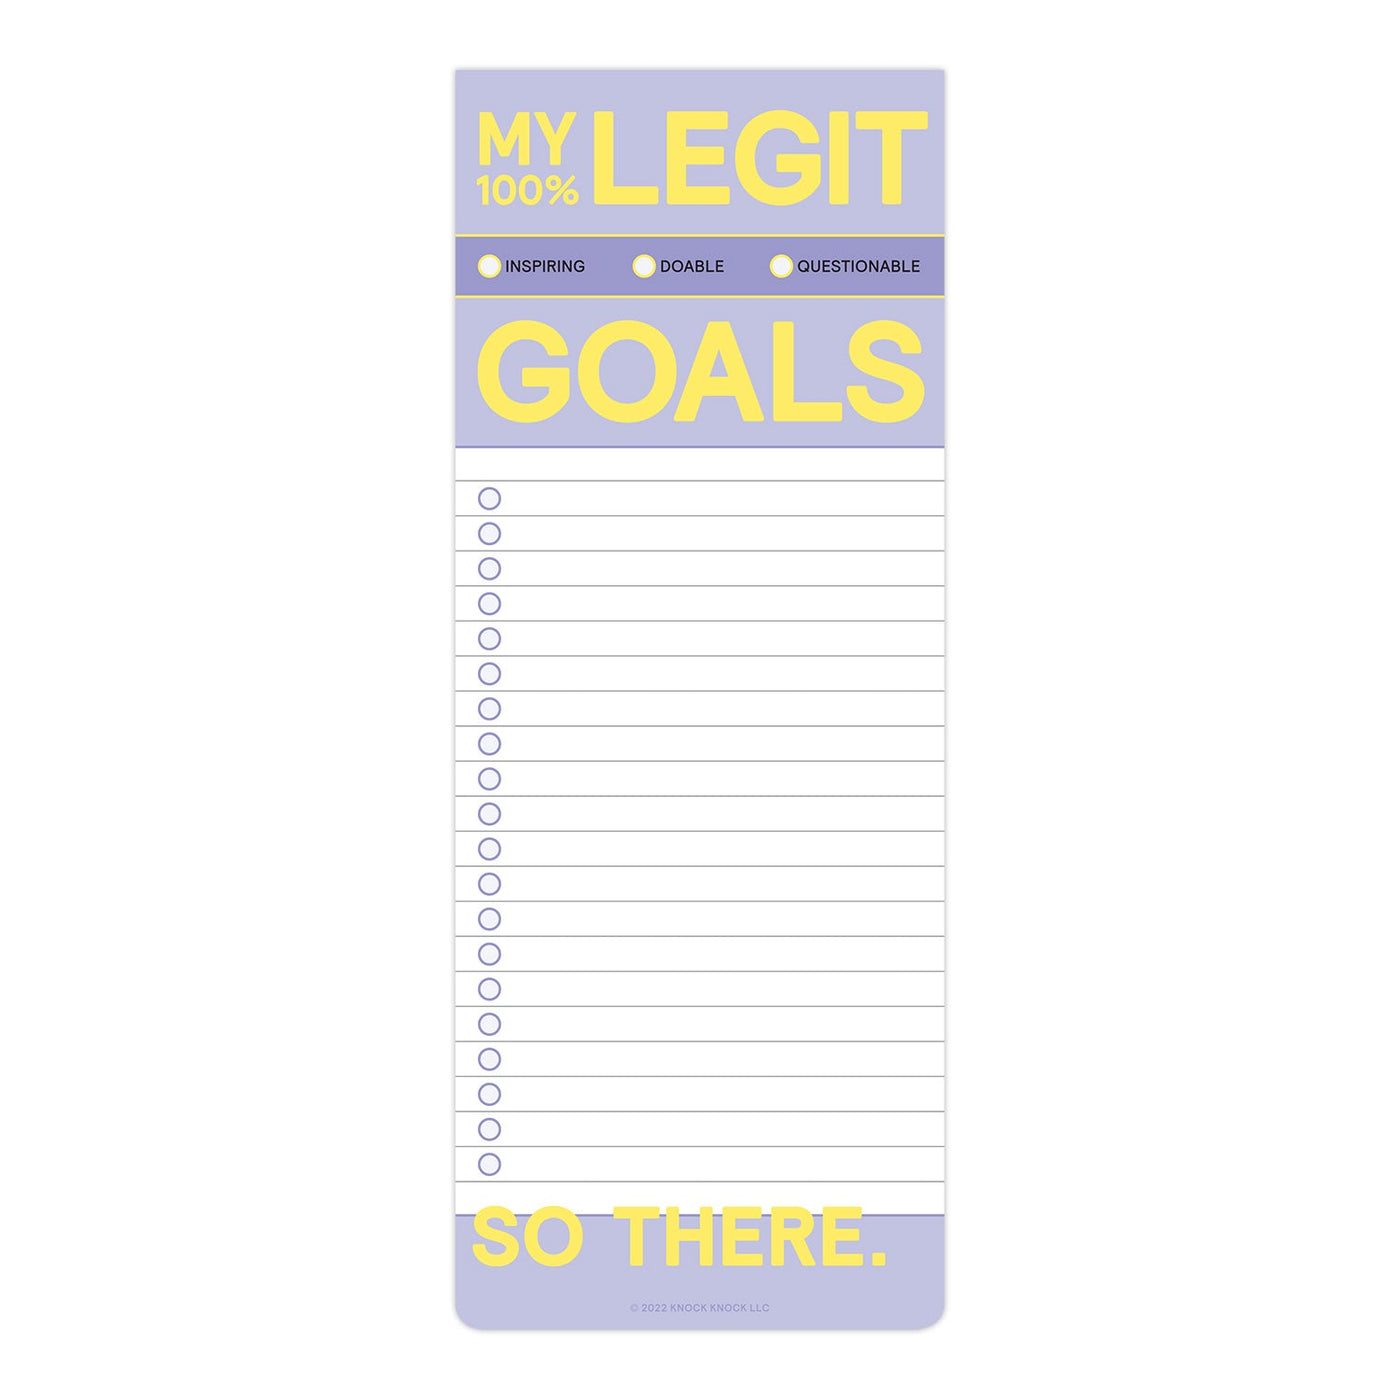 My Legit Goals Make-a-List Pad